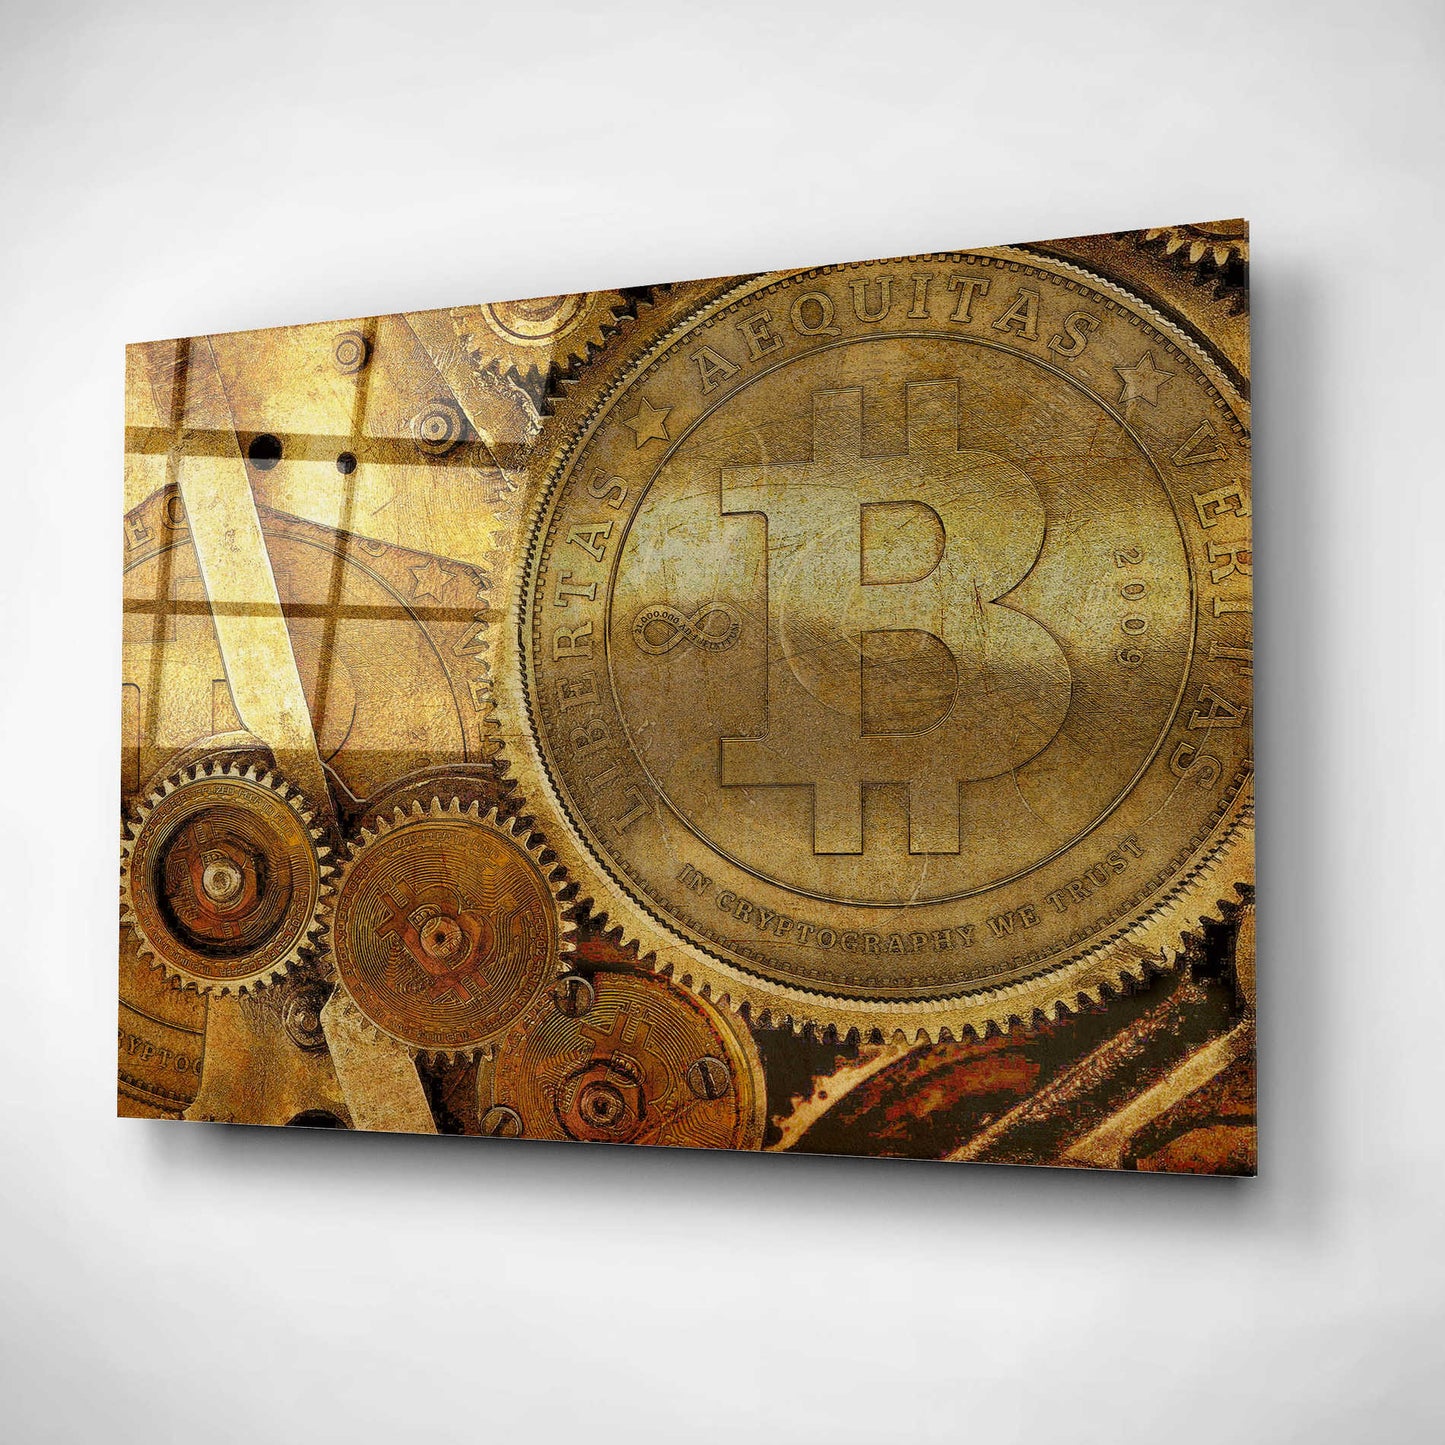 Epic Art 'Grunge Bitcoin One' by Steve Hunziker, Acrlic Glass Wall Art,16x12